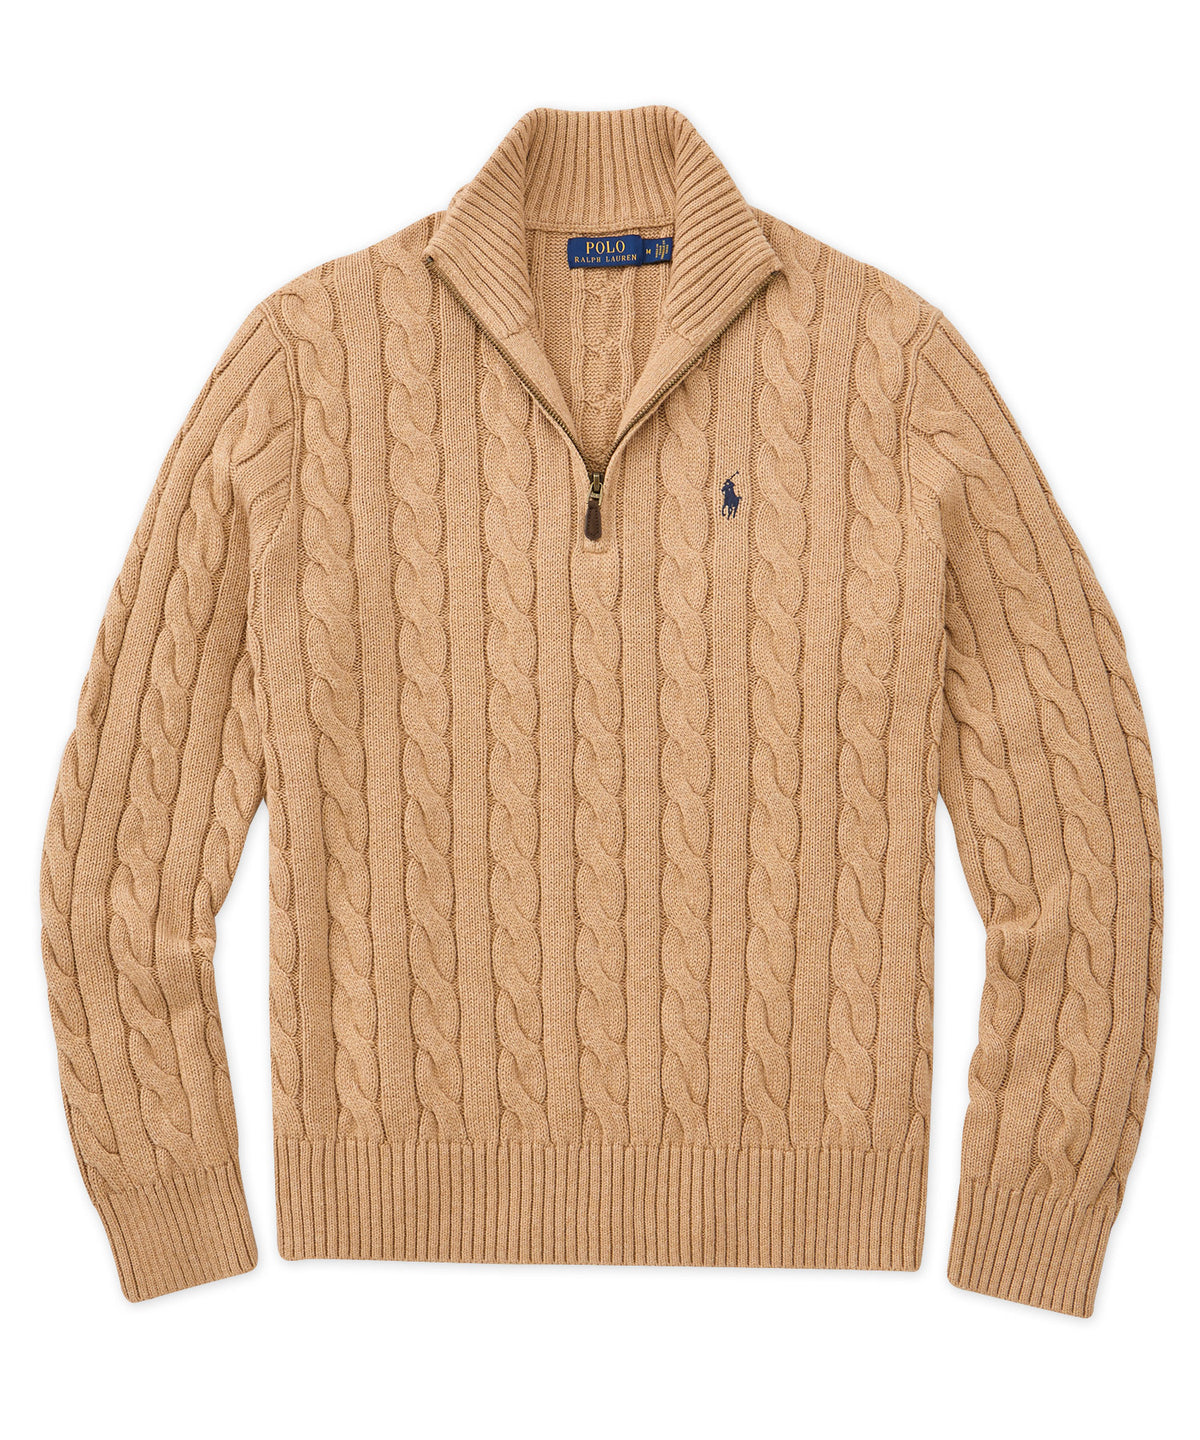 POLO RALPH LAUREN CABLE-KNIT COTTON SWEATER, Orange Men's Sweater